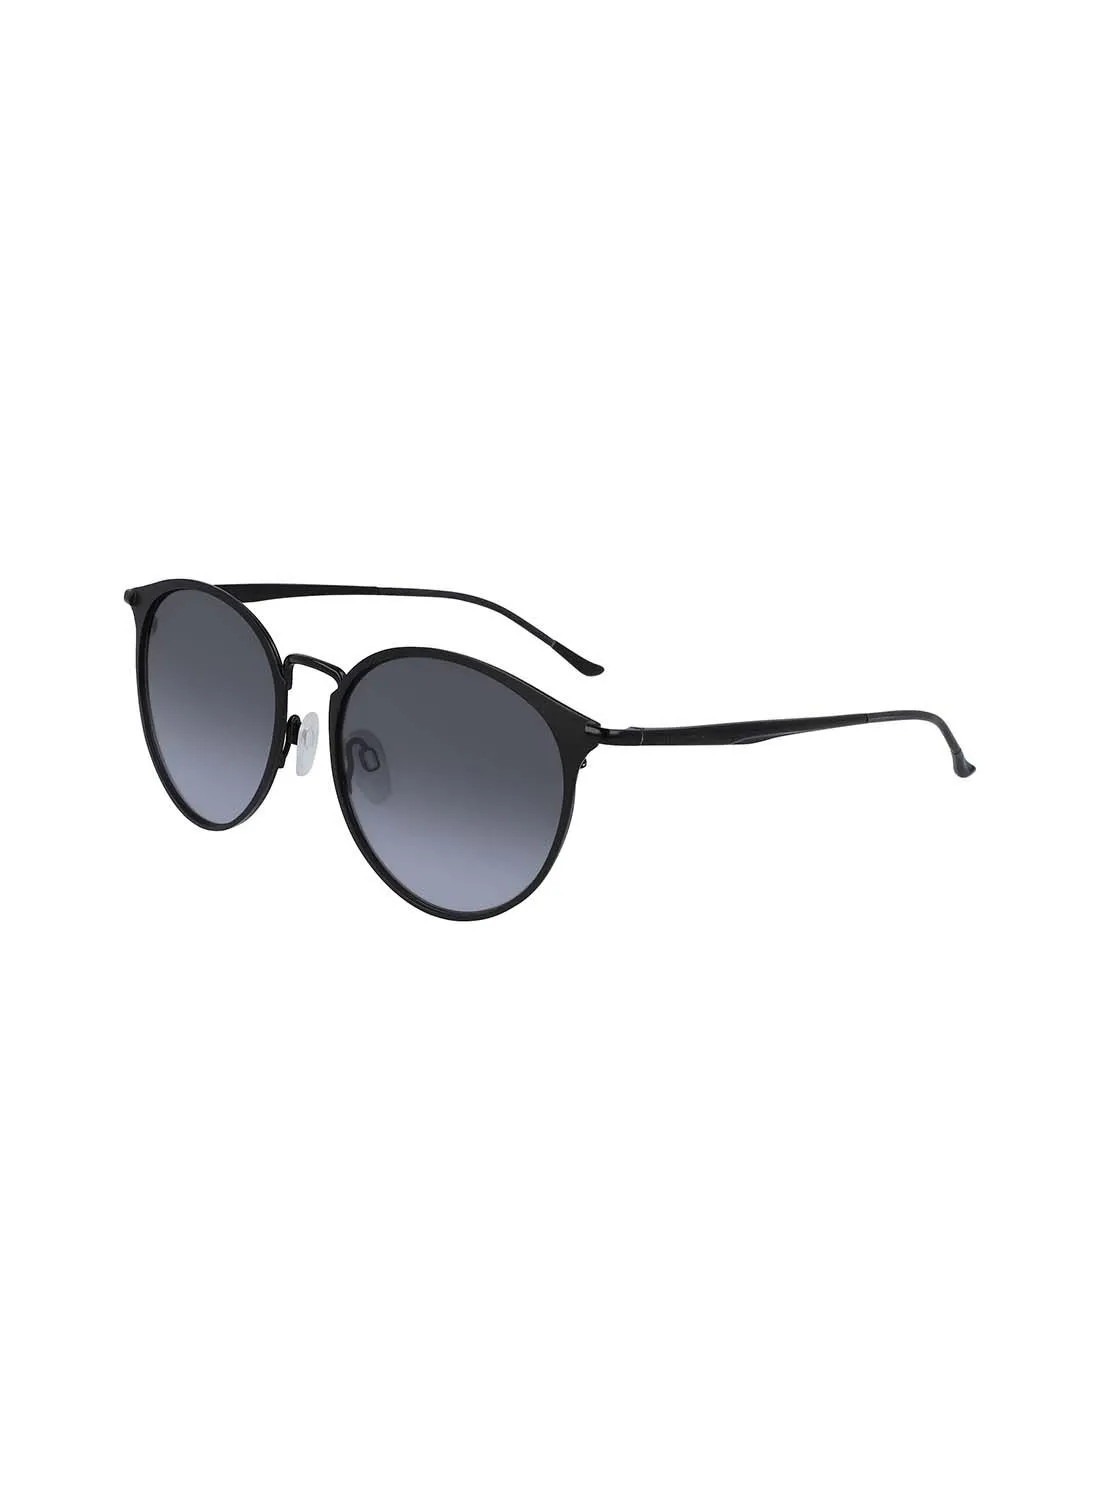 Donna Karan Full Rim Metal Round Sunglasses DO100S 5418 (001)